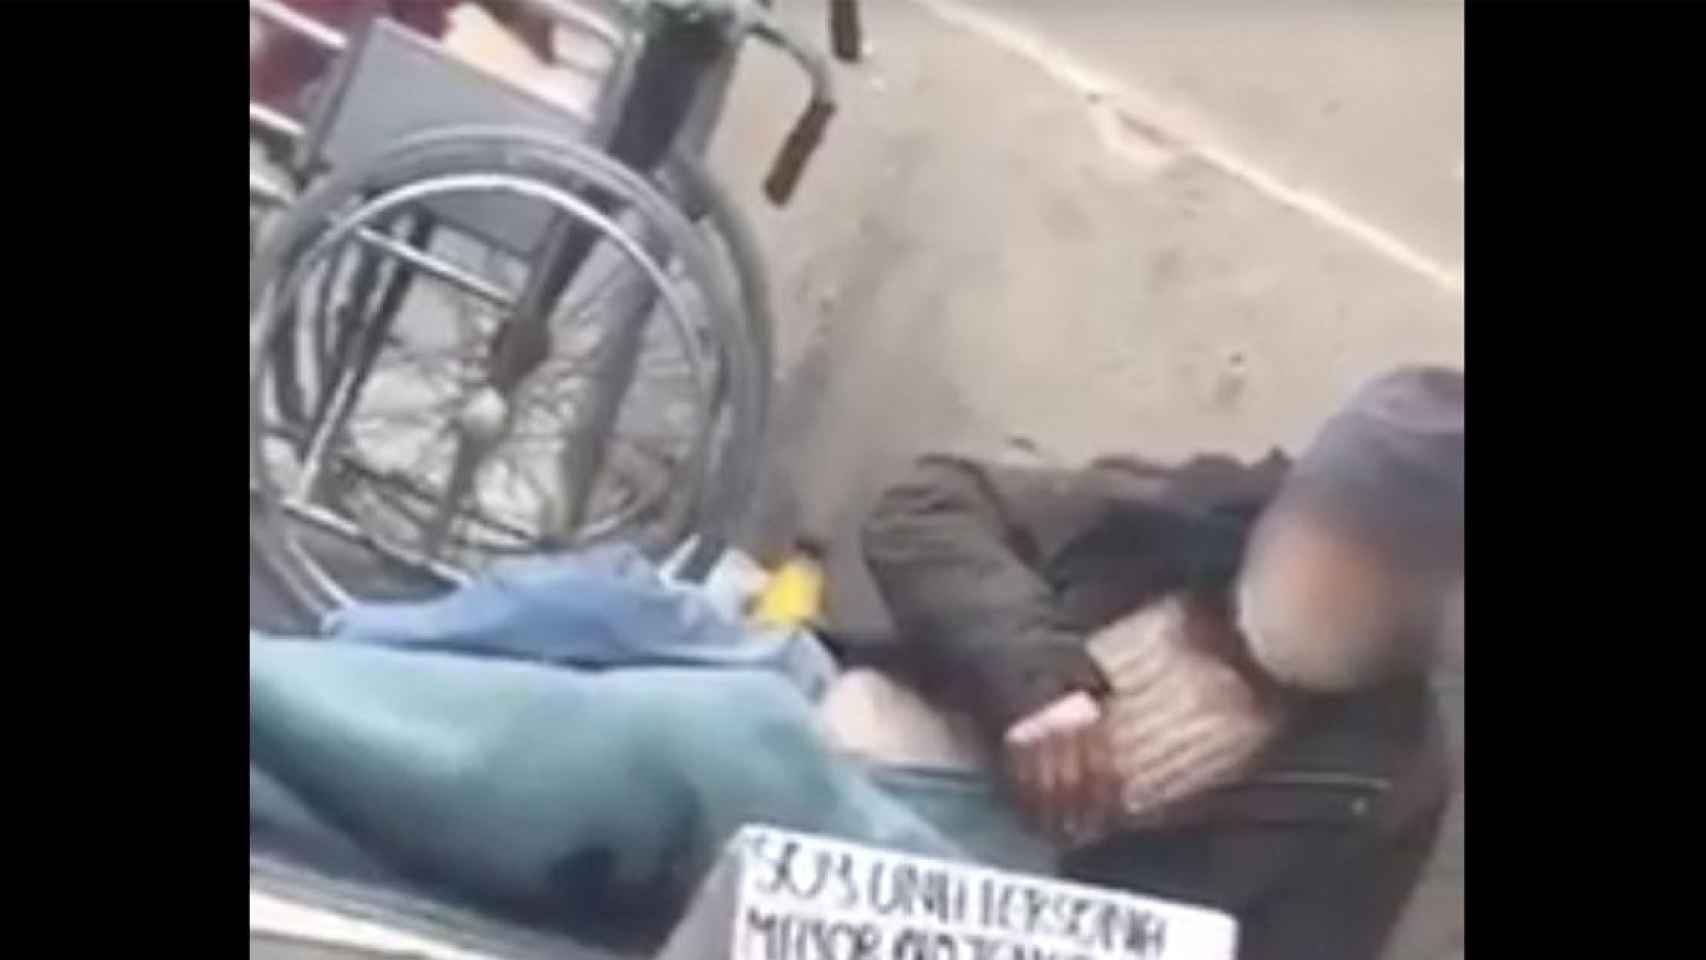 El hombre, explotado como mendigo, en las calles de Barcelona / MOSSOS D'ESQUADRA